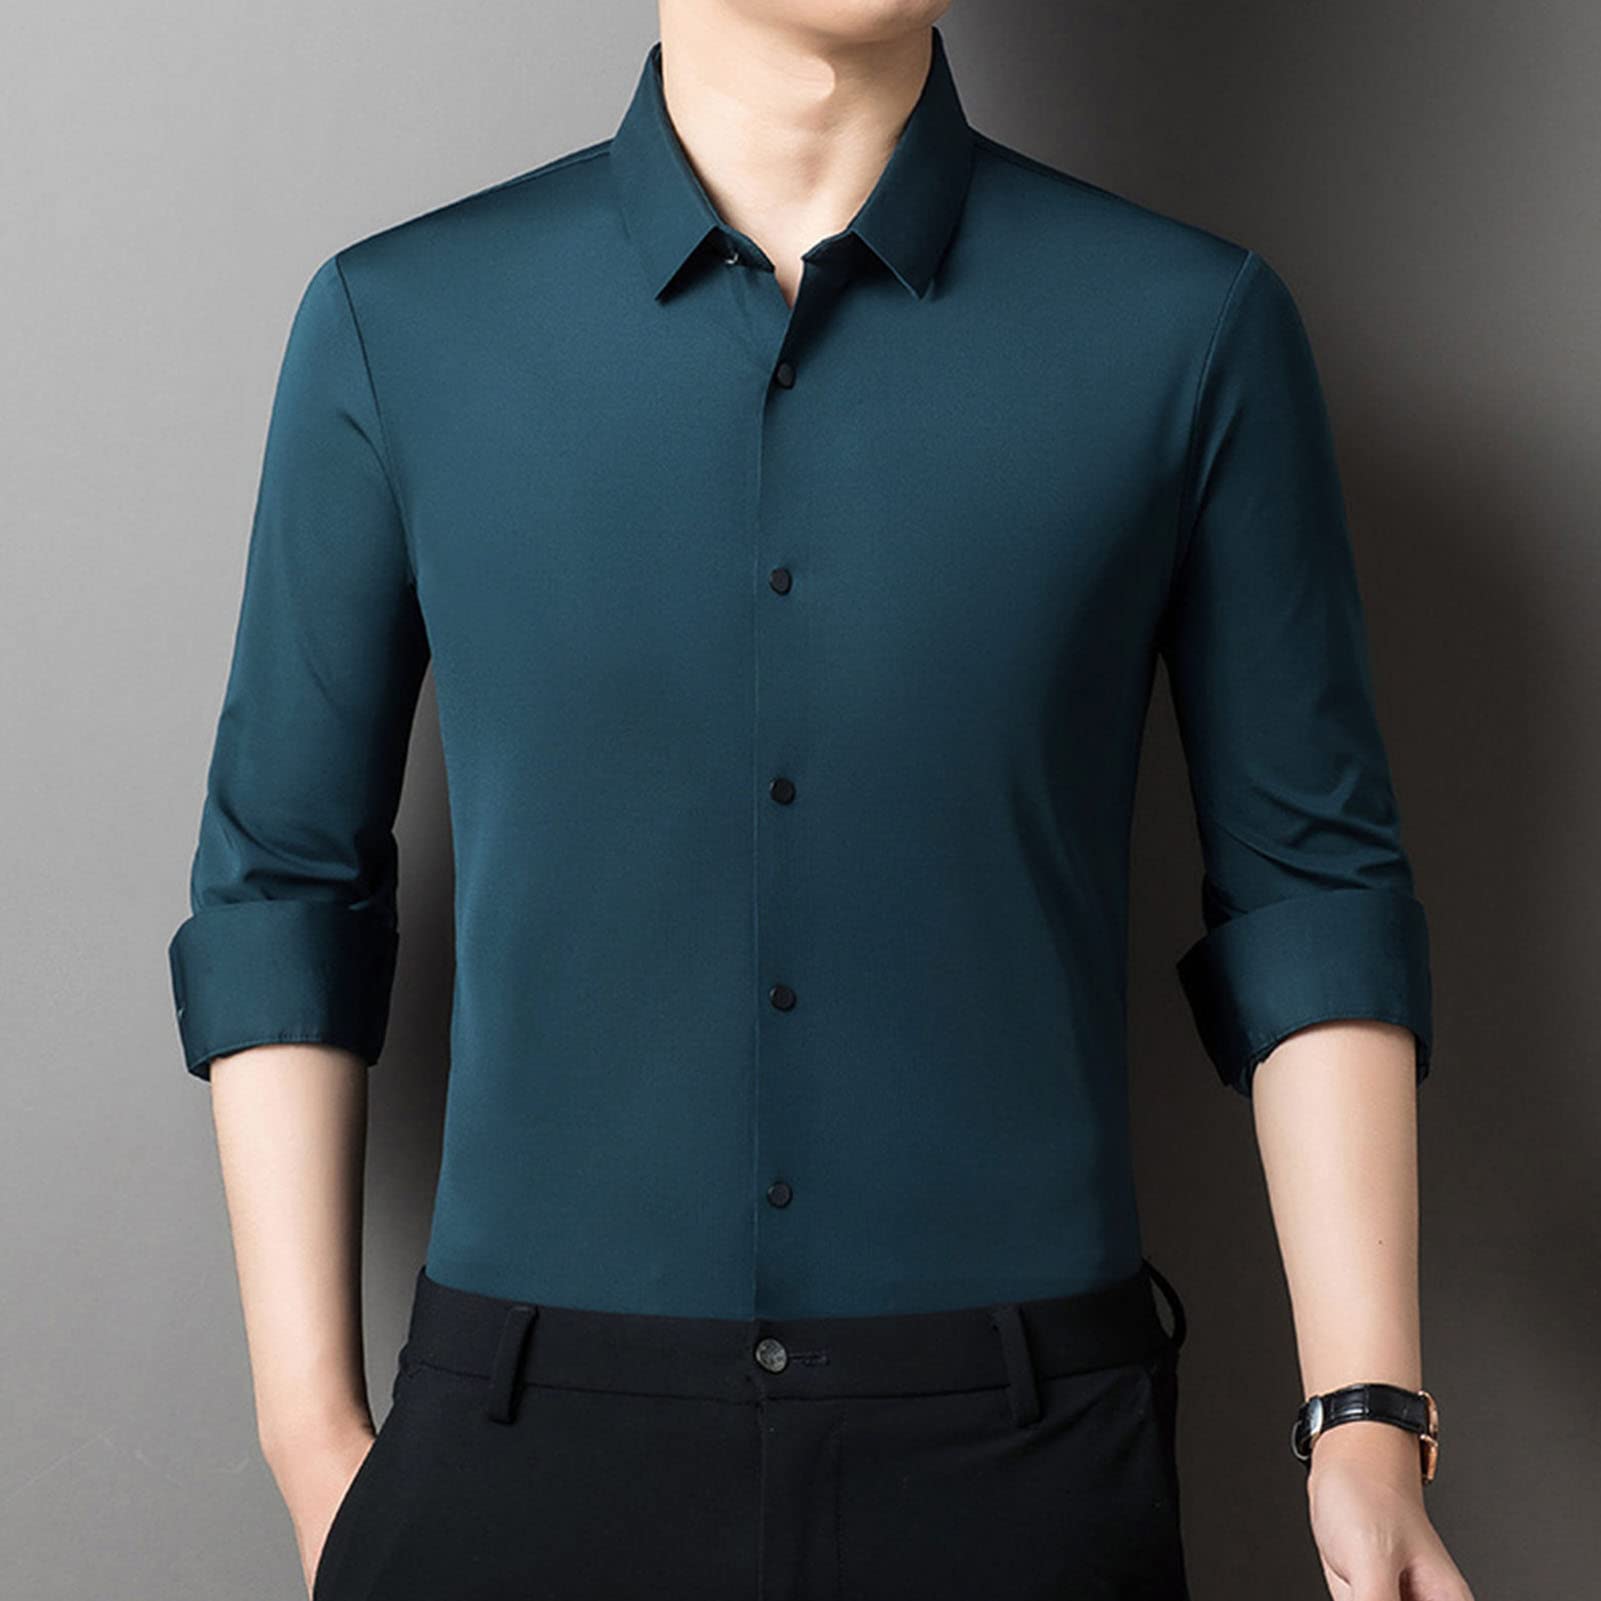 Long Sleeve Stylish Shirts for Men Solid Lightweight Slim Shirts Classic Casual Business Button Down Dress Shirt (Dark Green,3X-Large)